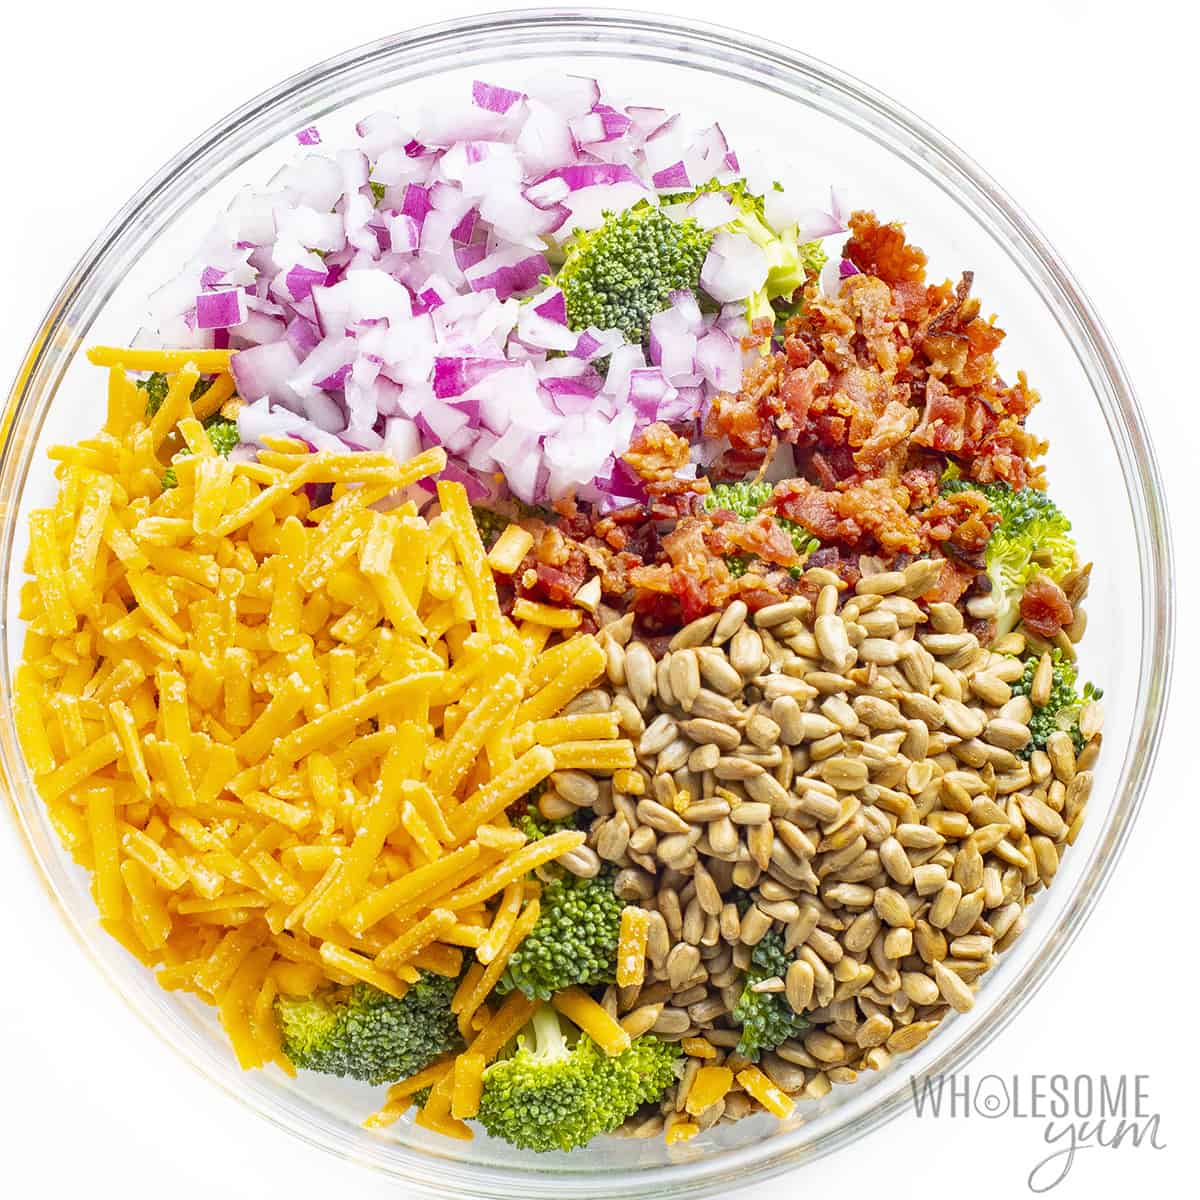 Keto broccoli salad ingredients in a bowl.